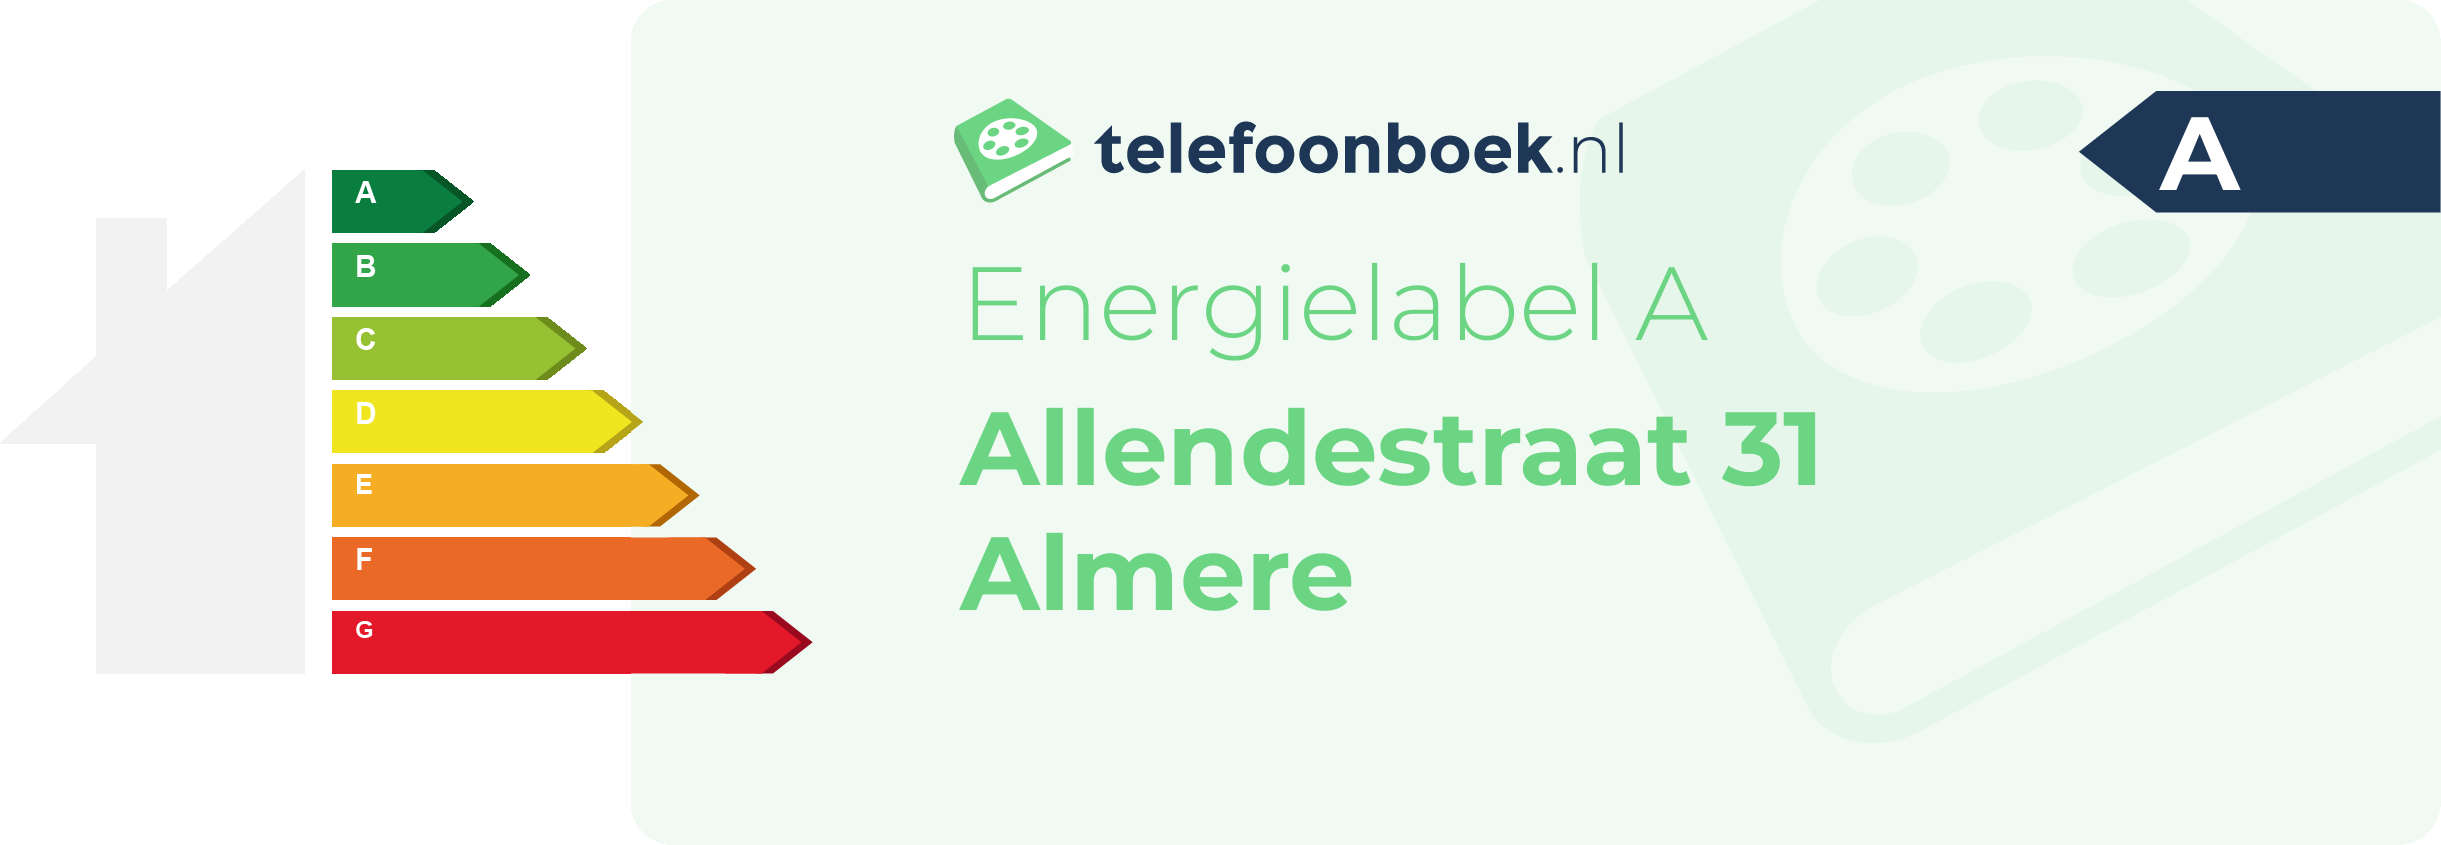 Energielabel Allendestraat 31 Almere